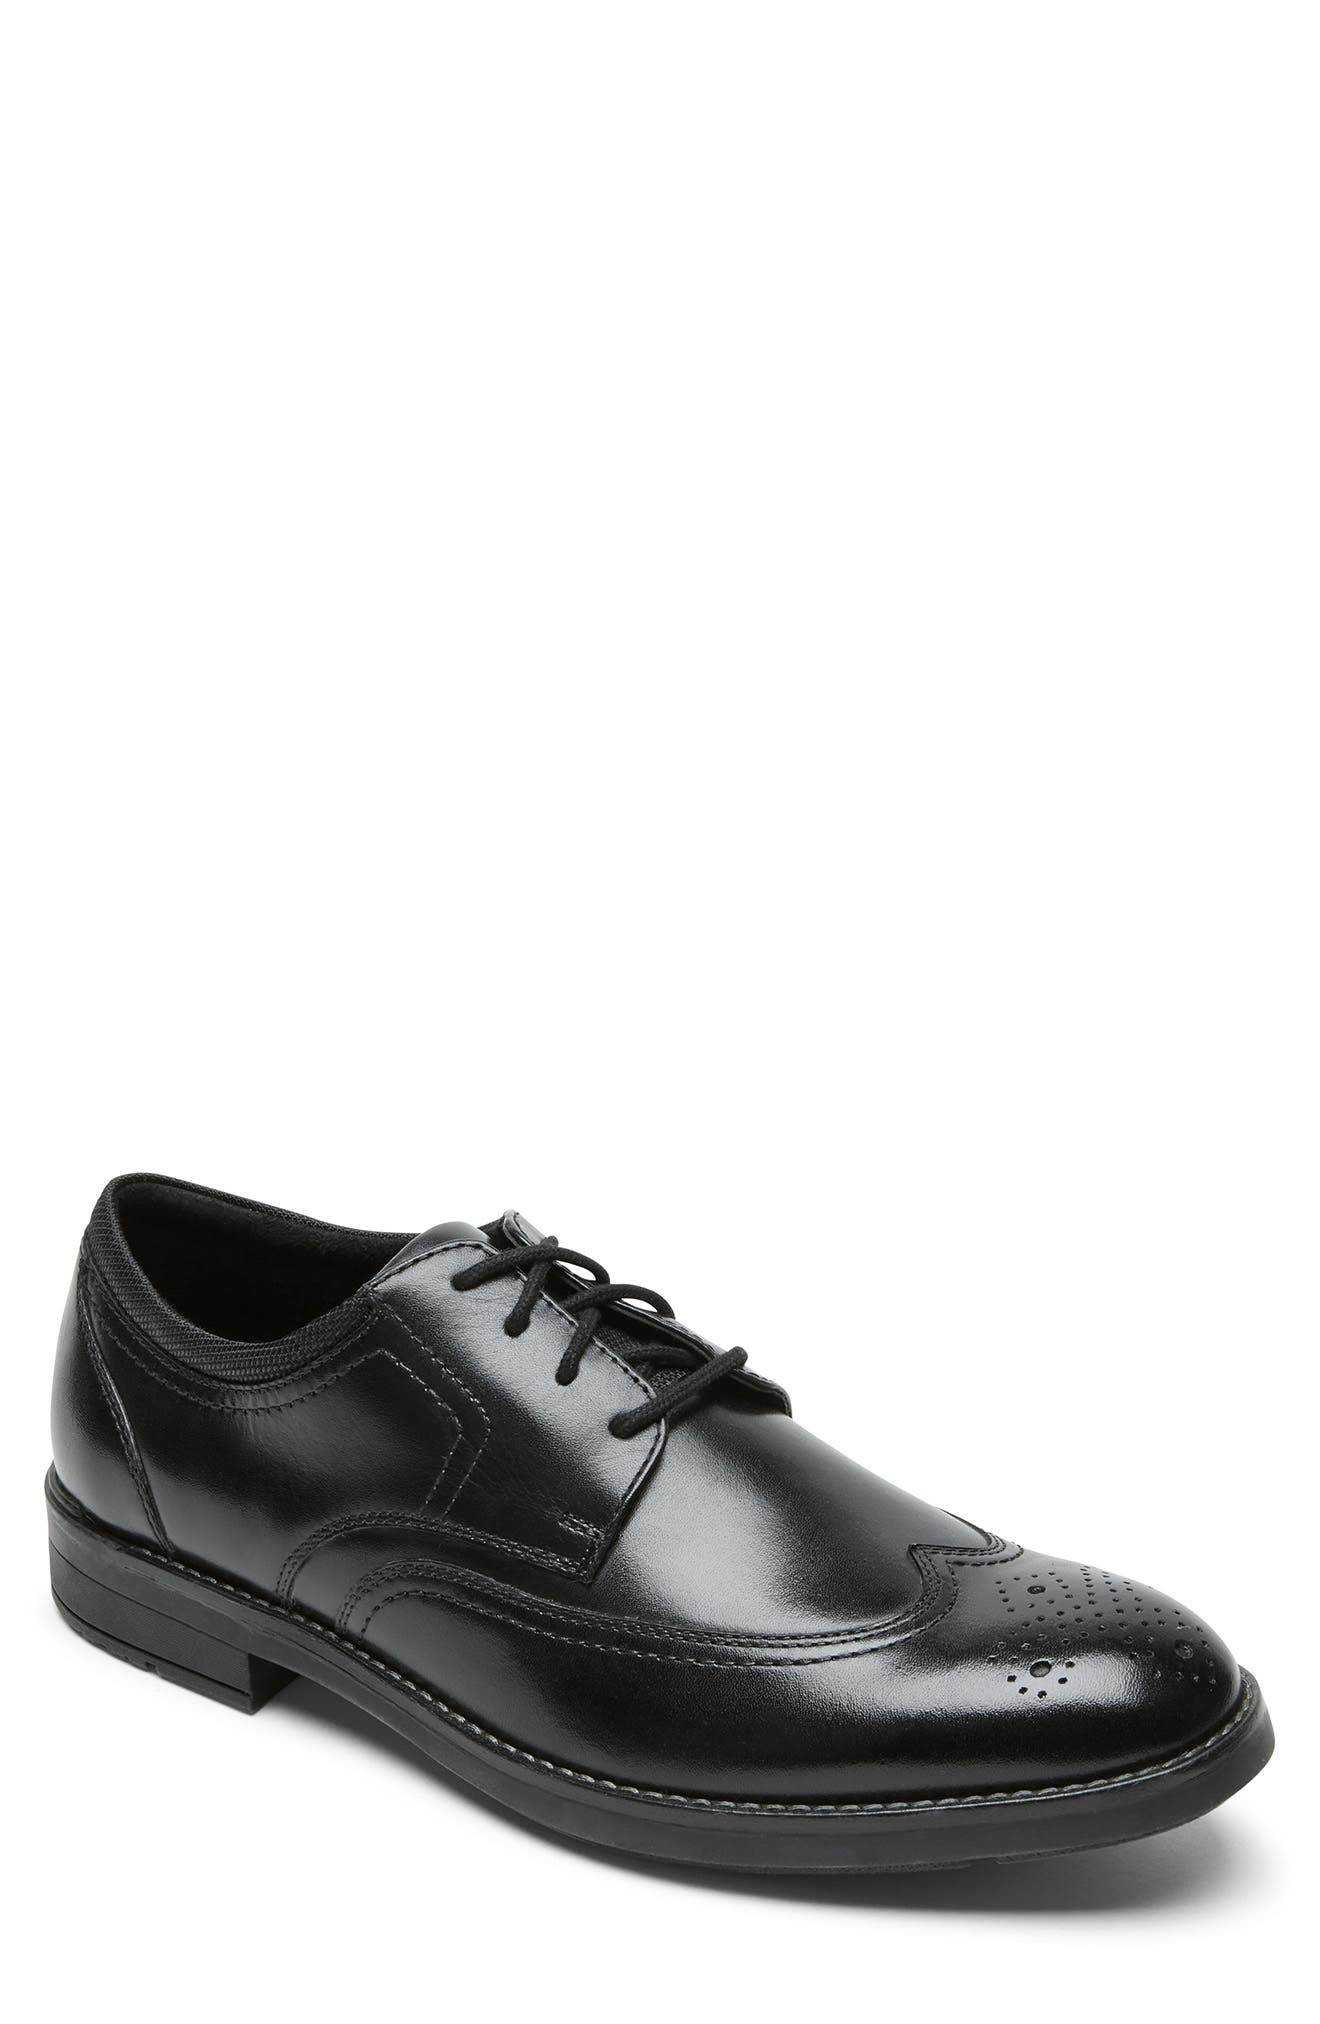 Pod Derby Mens Boys Formal Office School Slip On Black Leather Shoes Size 32-42